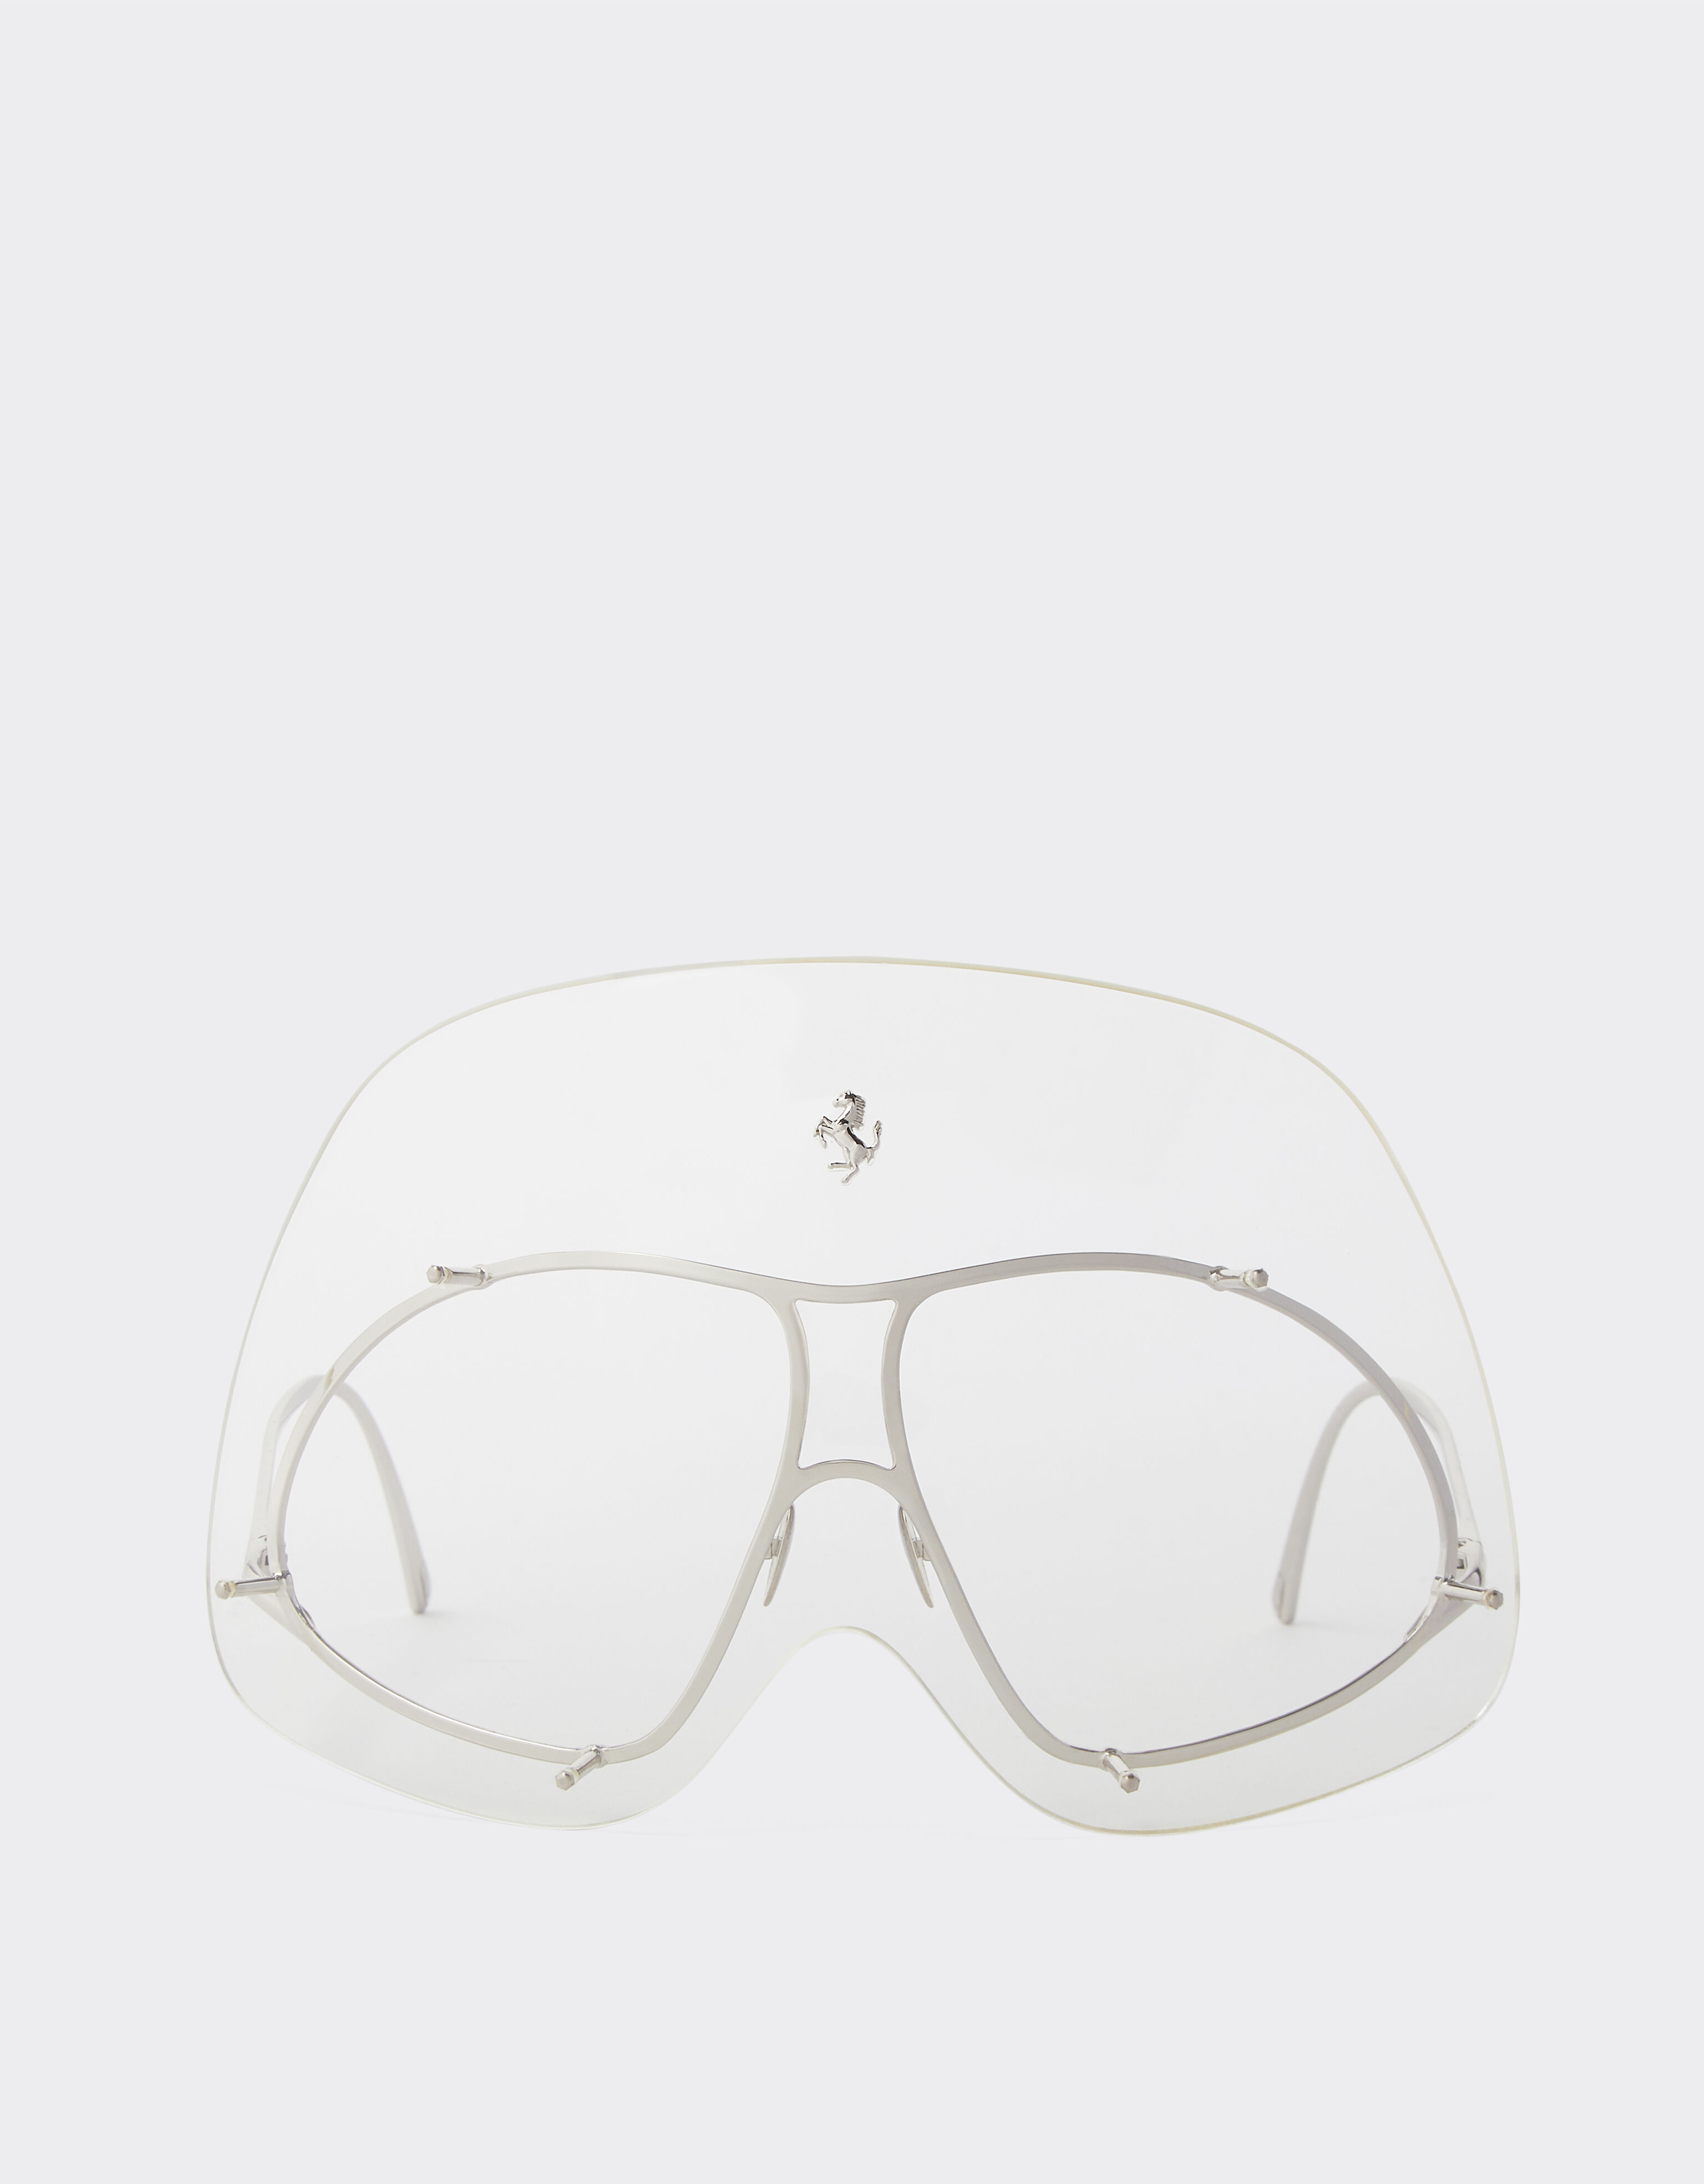 Ferrari Ferrari Limited Edition metal sunglasses with transparent shield Silver F1248f